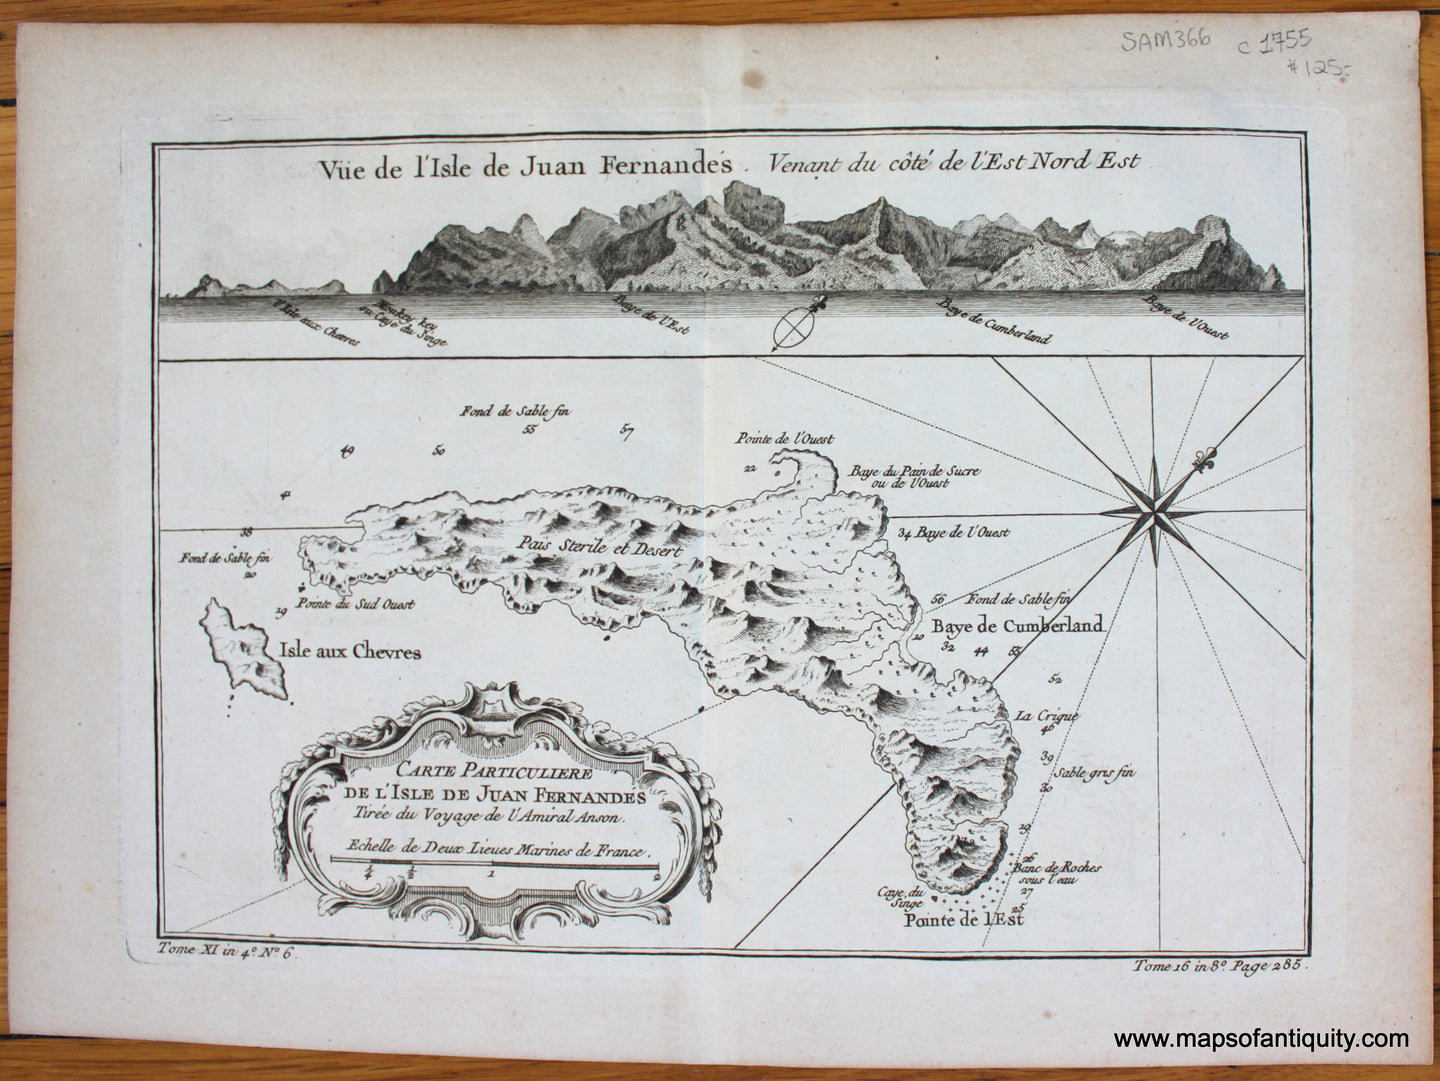 Antique-Early-Map-Juan-Fernandez-Island-Islands-Chile-South-America-Carte-Particuliere-de-L'Isle-de-Juan-Fernandes-French-Bellin-1755-1750s-1700s-Mid-18th-Century-Maps-of-Antiquity